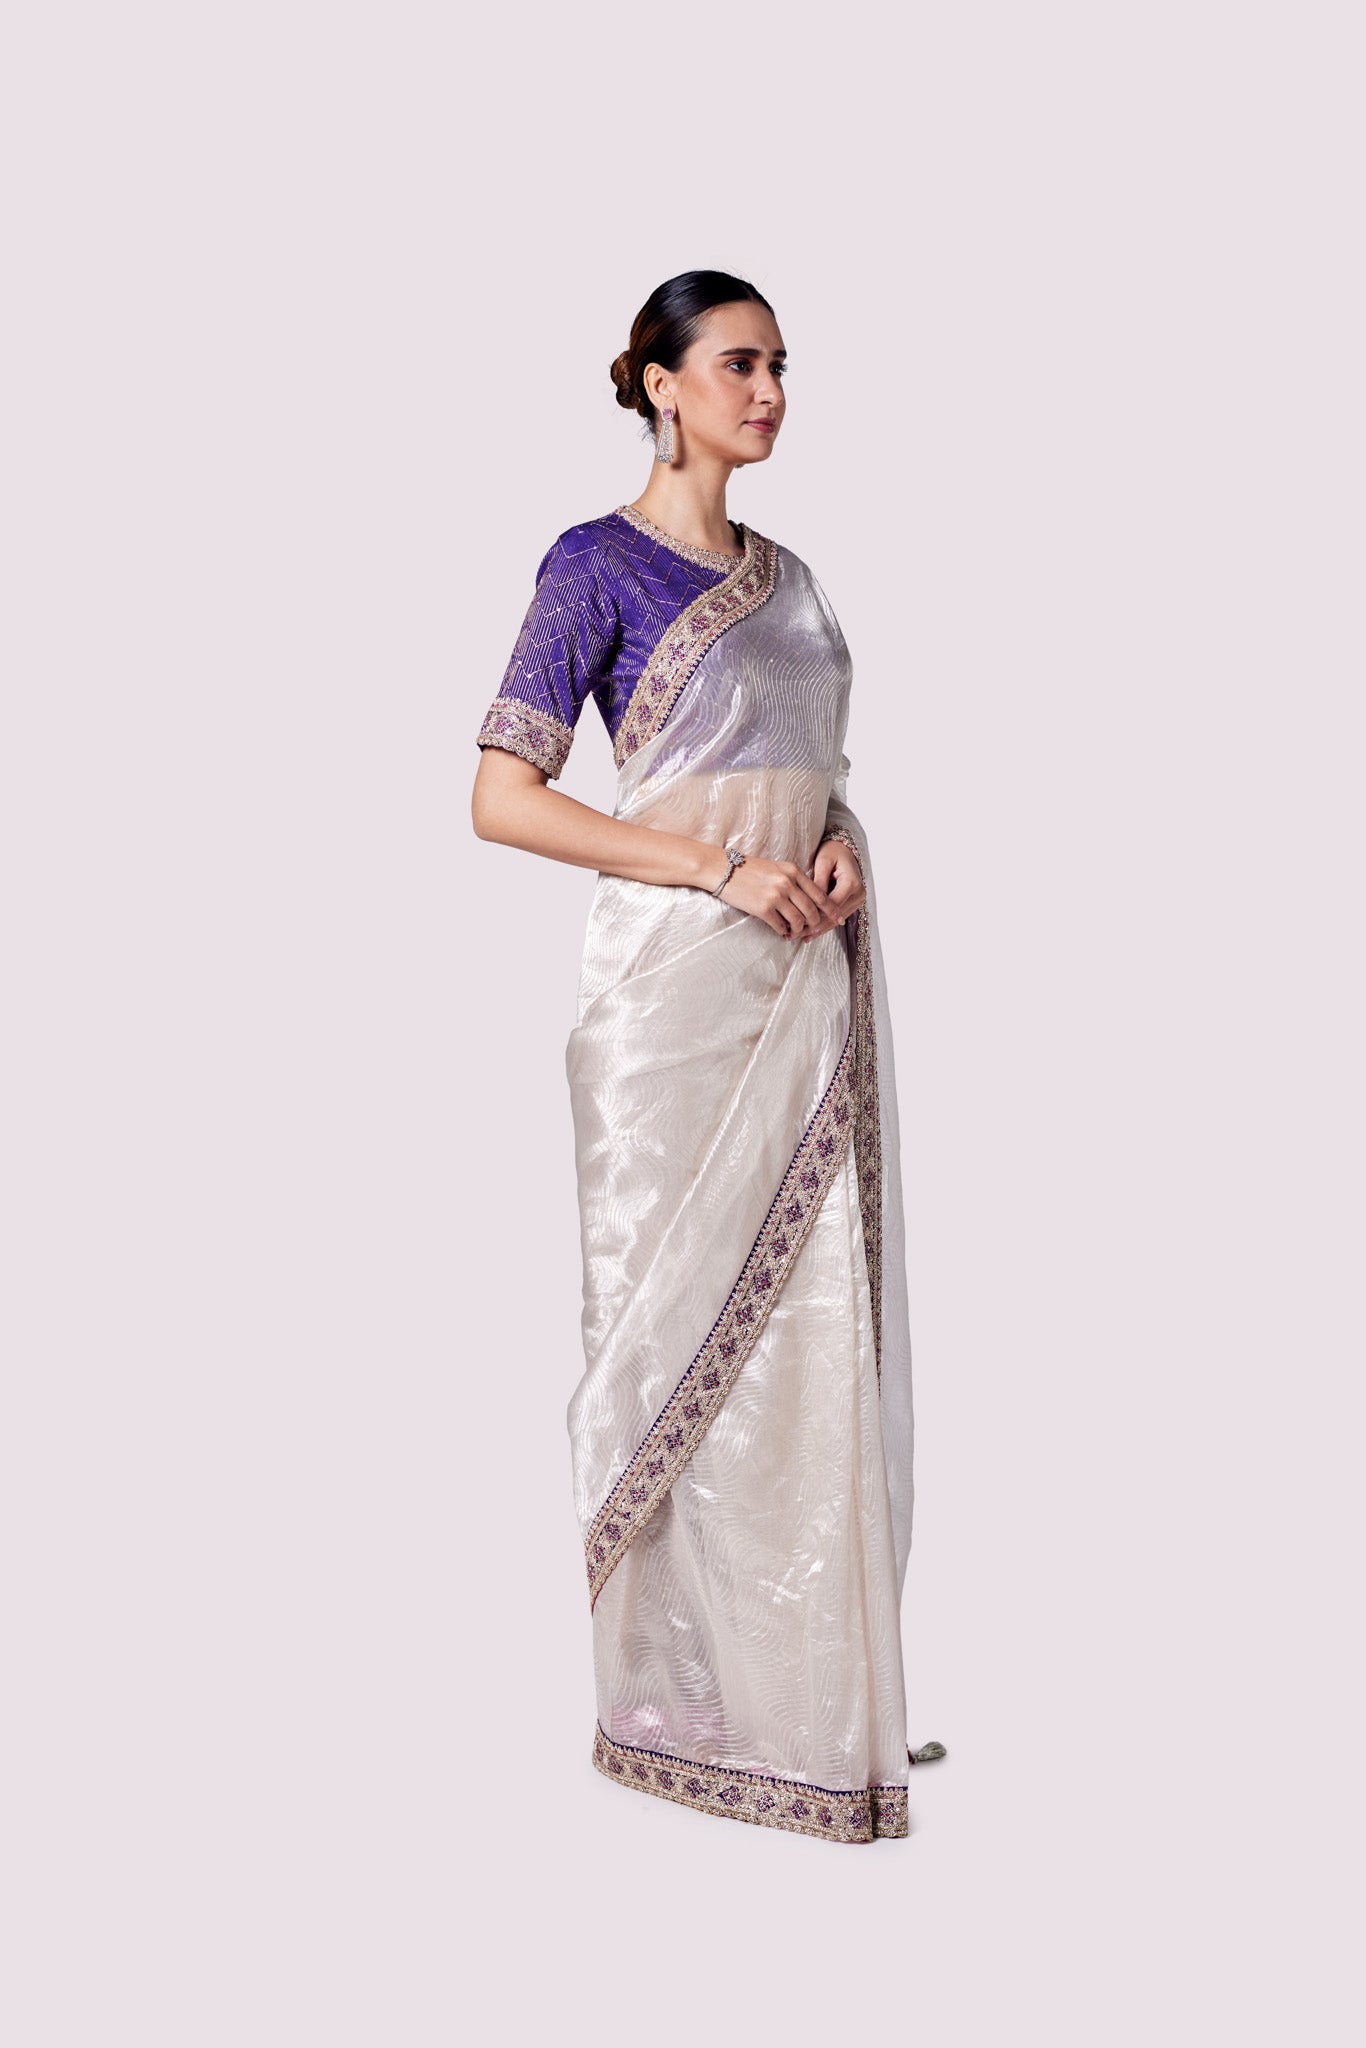 Buy silver zari tissue saree online in USA with purple embroidered designer blouse. Look like a royalty in exquisite designer sarees, embroidered sarees, handwoven sarees, pure silk saris, Banarasi sarees, Kanjivaram sarees from Pure Elegance Indian saree store in USA.-blouse